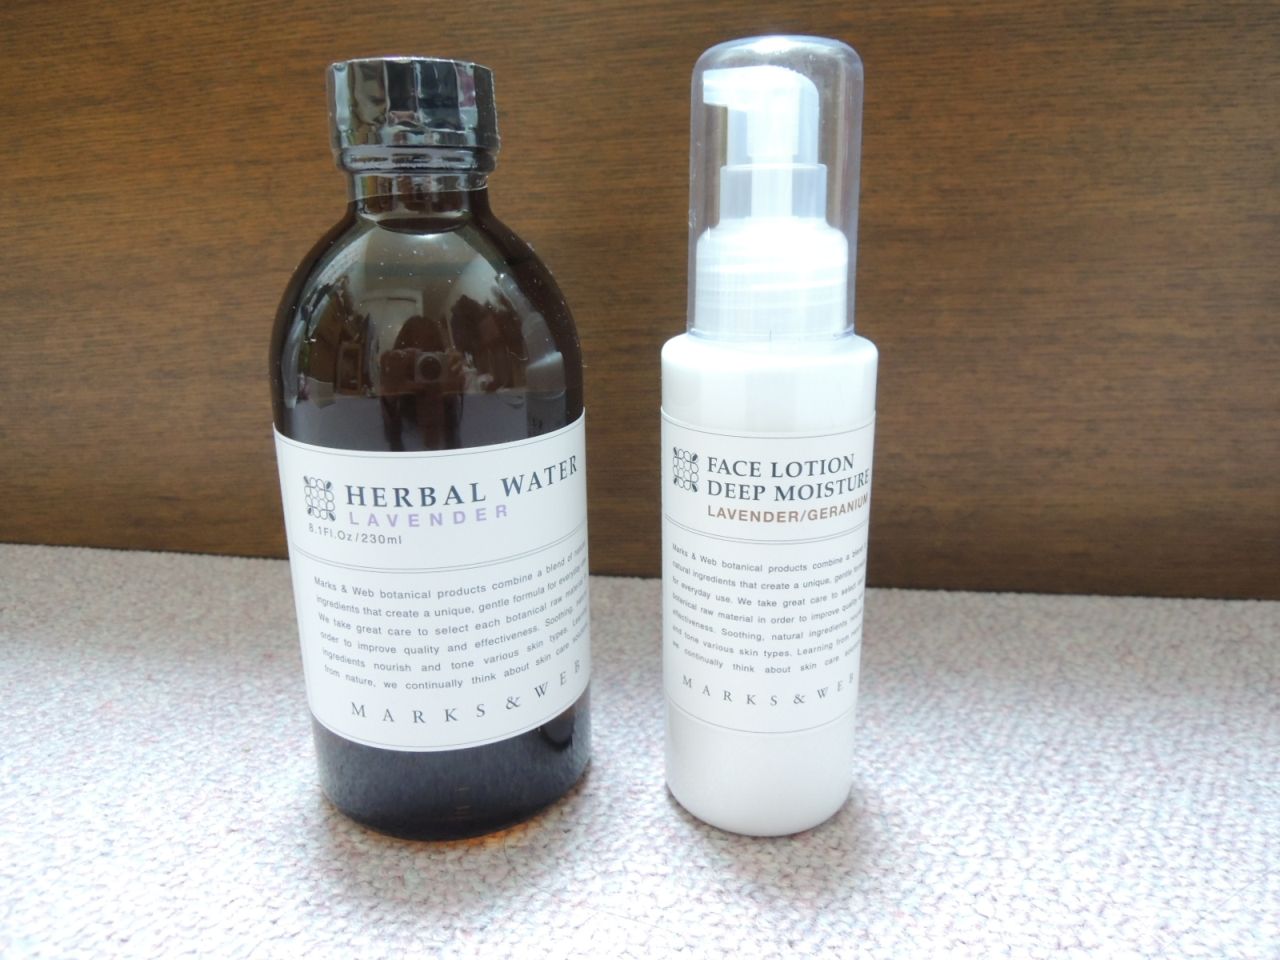 marks&webの化粧水と乳液のパッケージ2